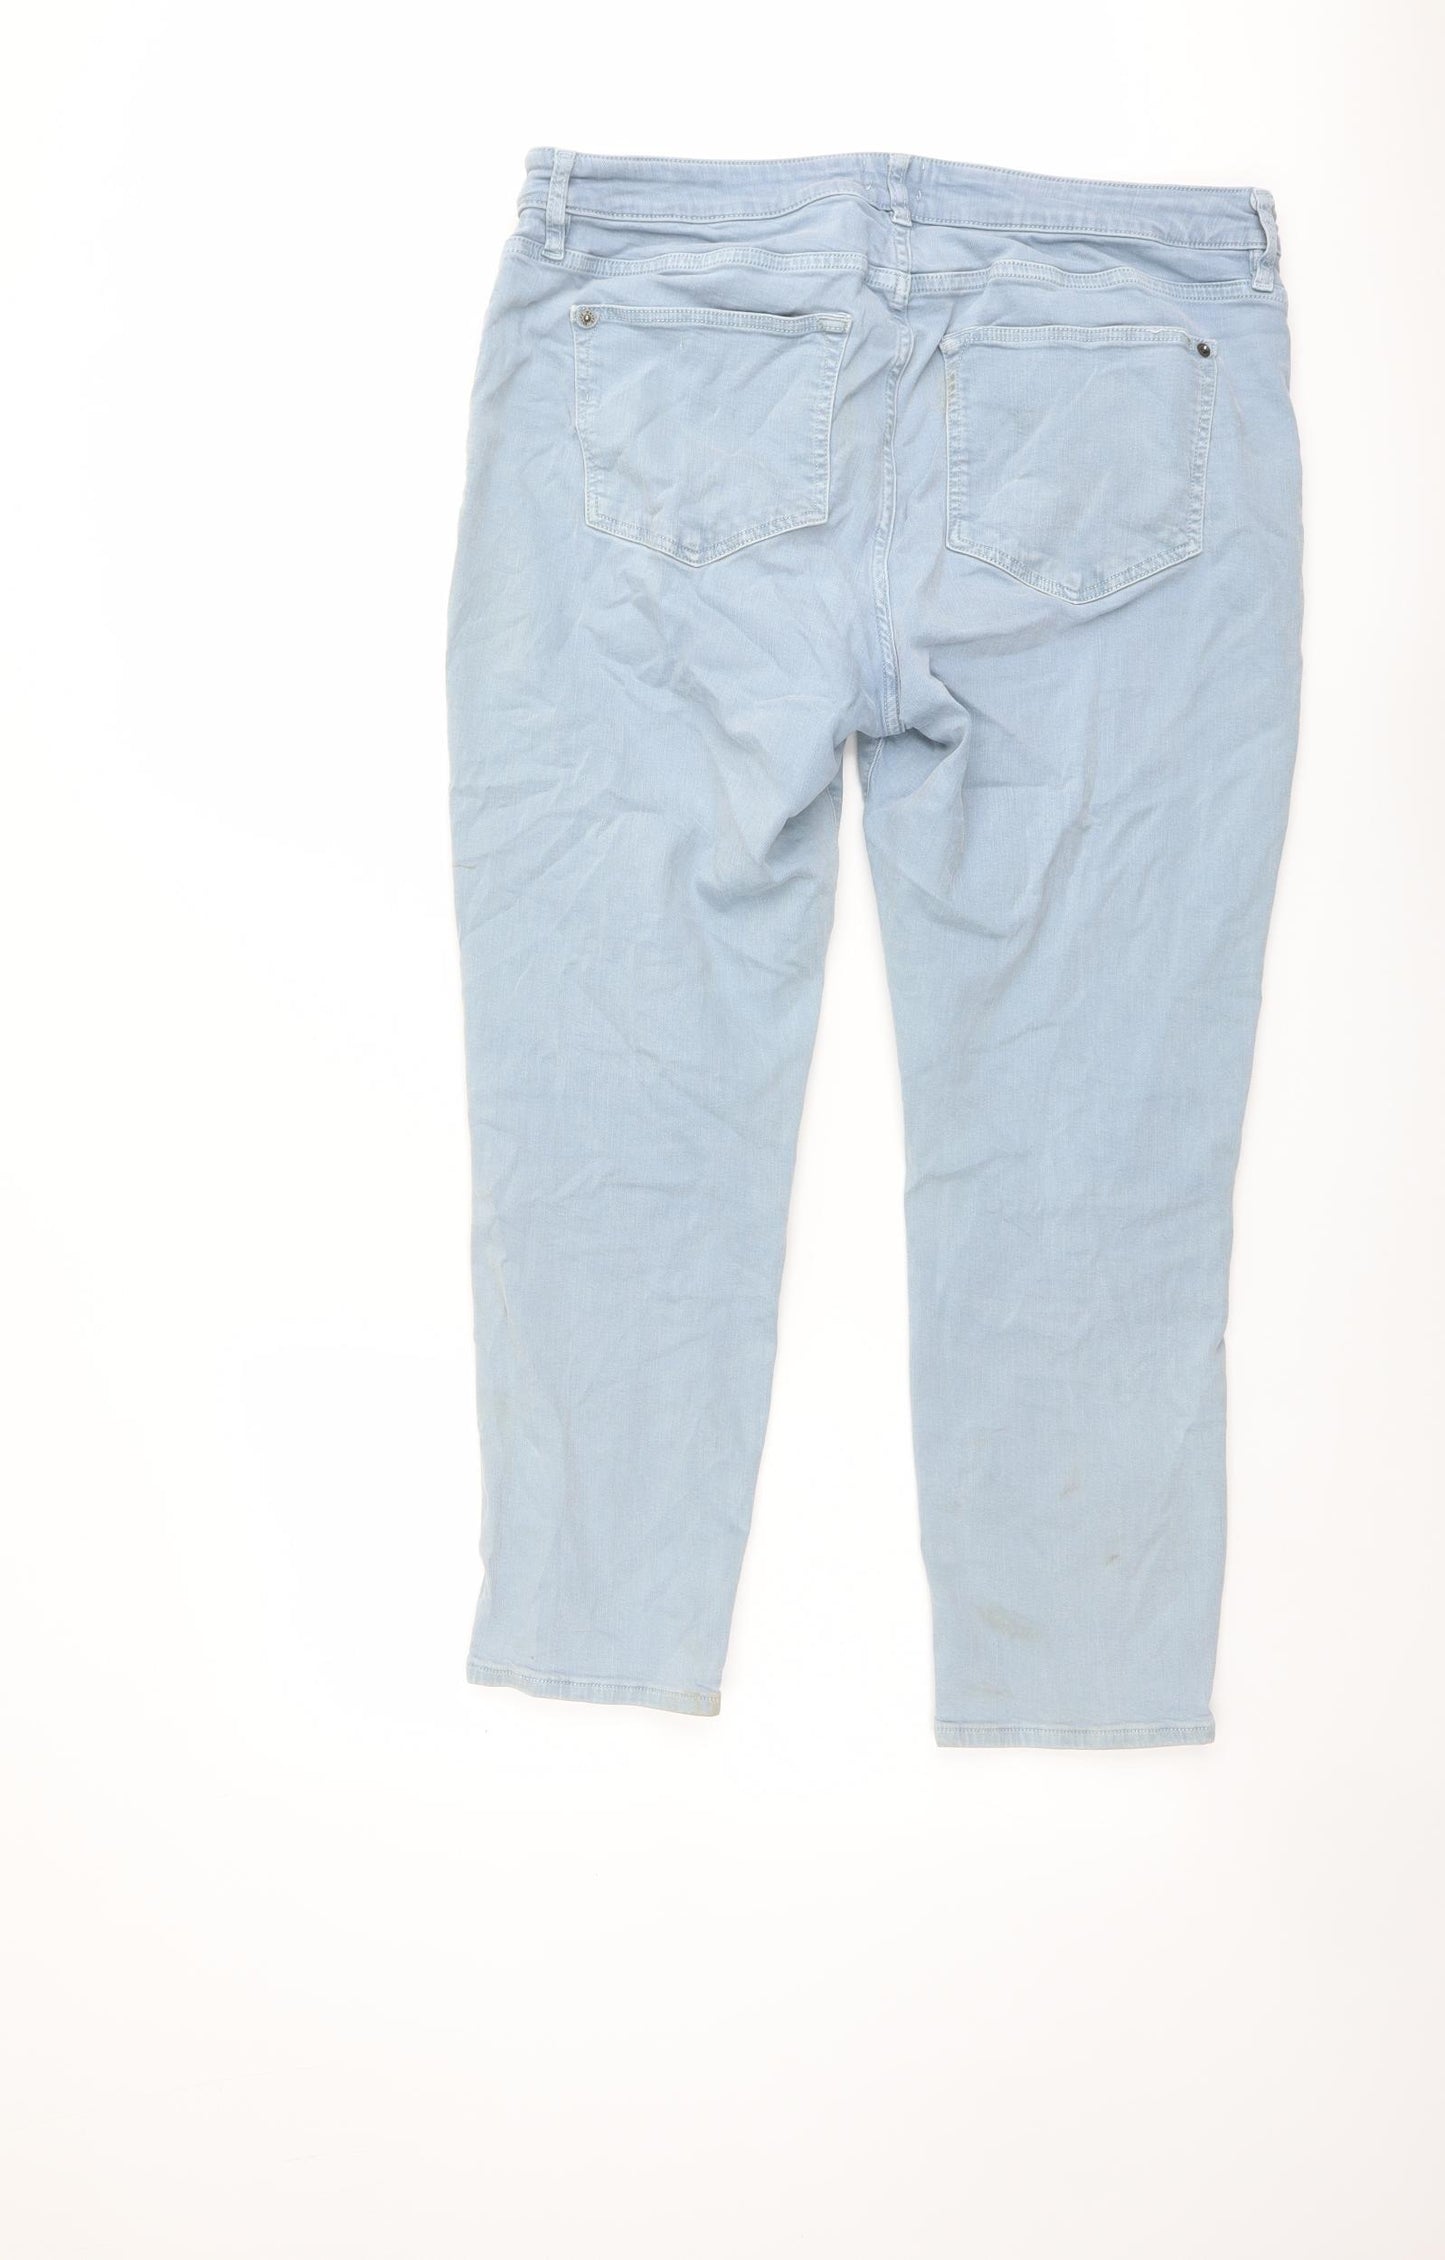 White Stuff Womens Blue Cotton Skinny Jeans Size 16 L25 in Regular Zip